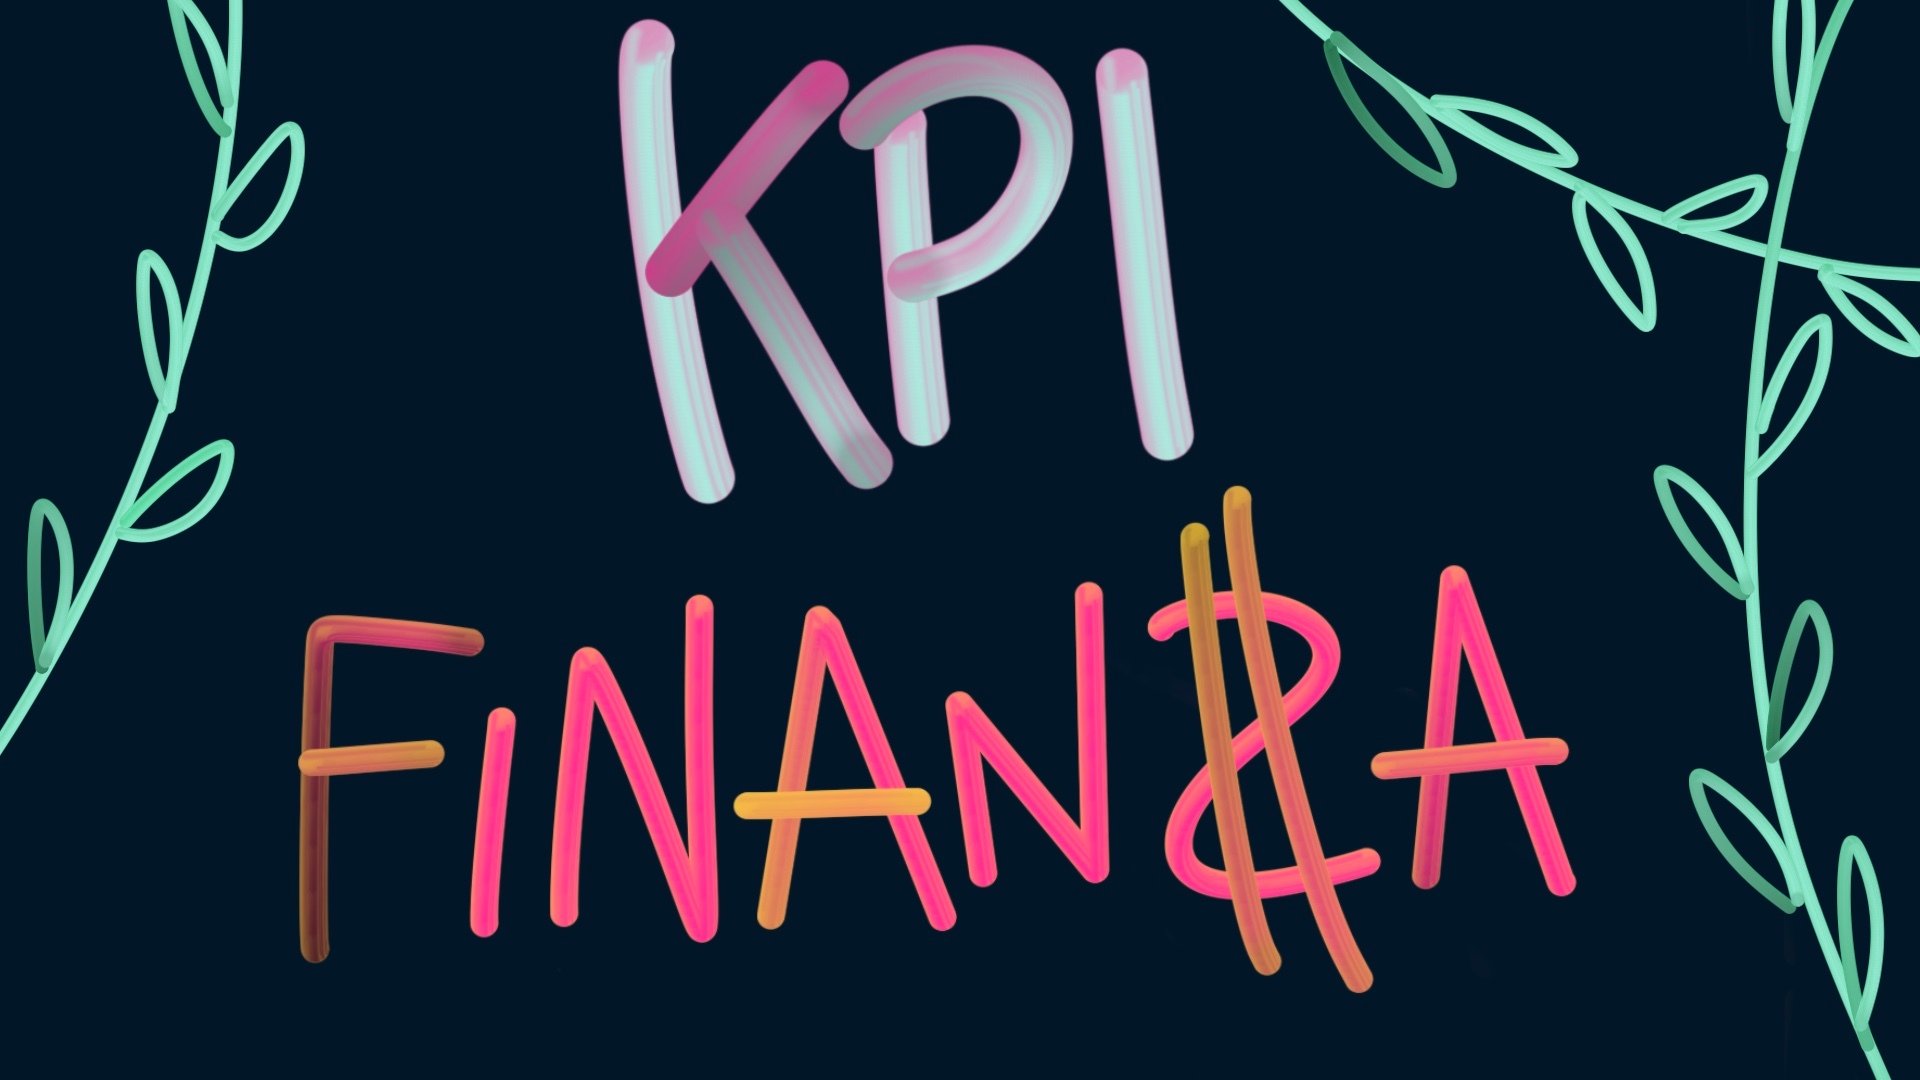 KPI finanziari